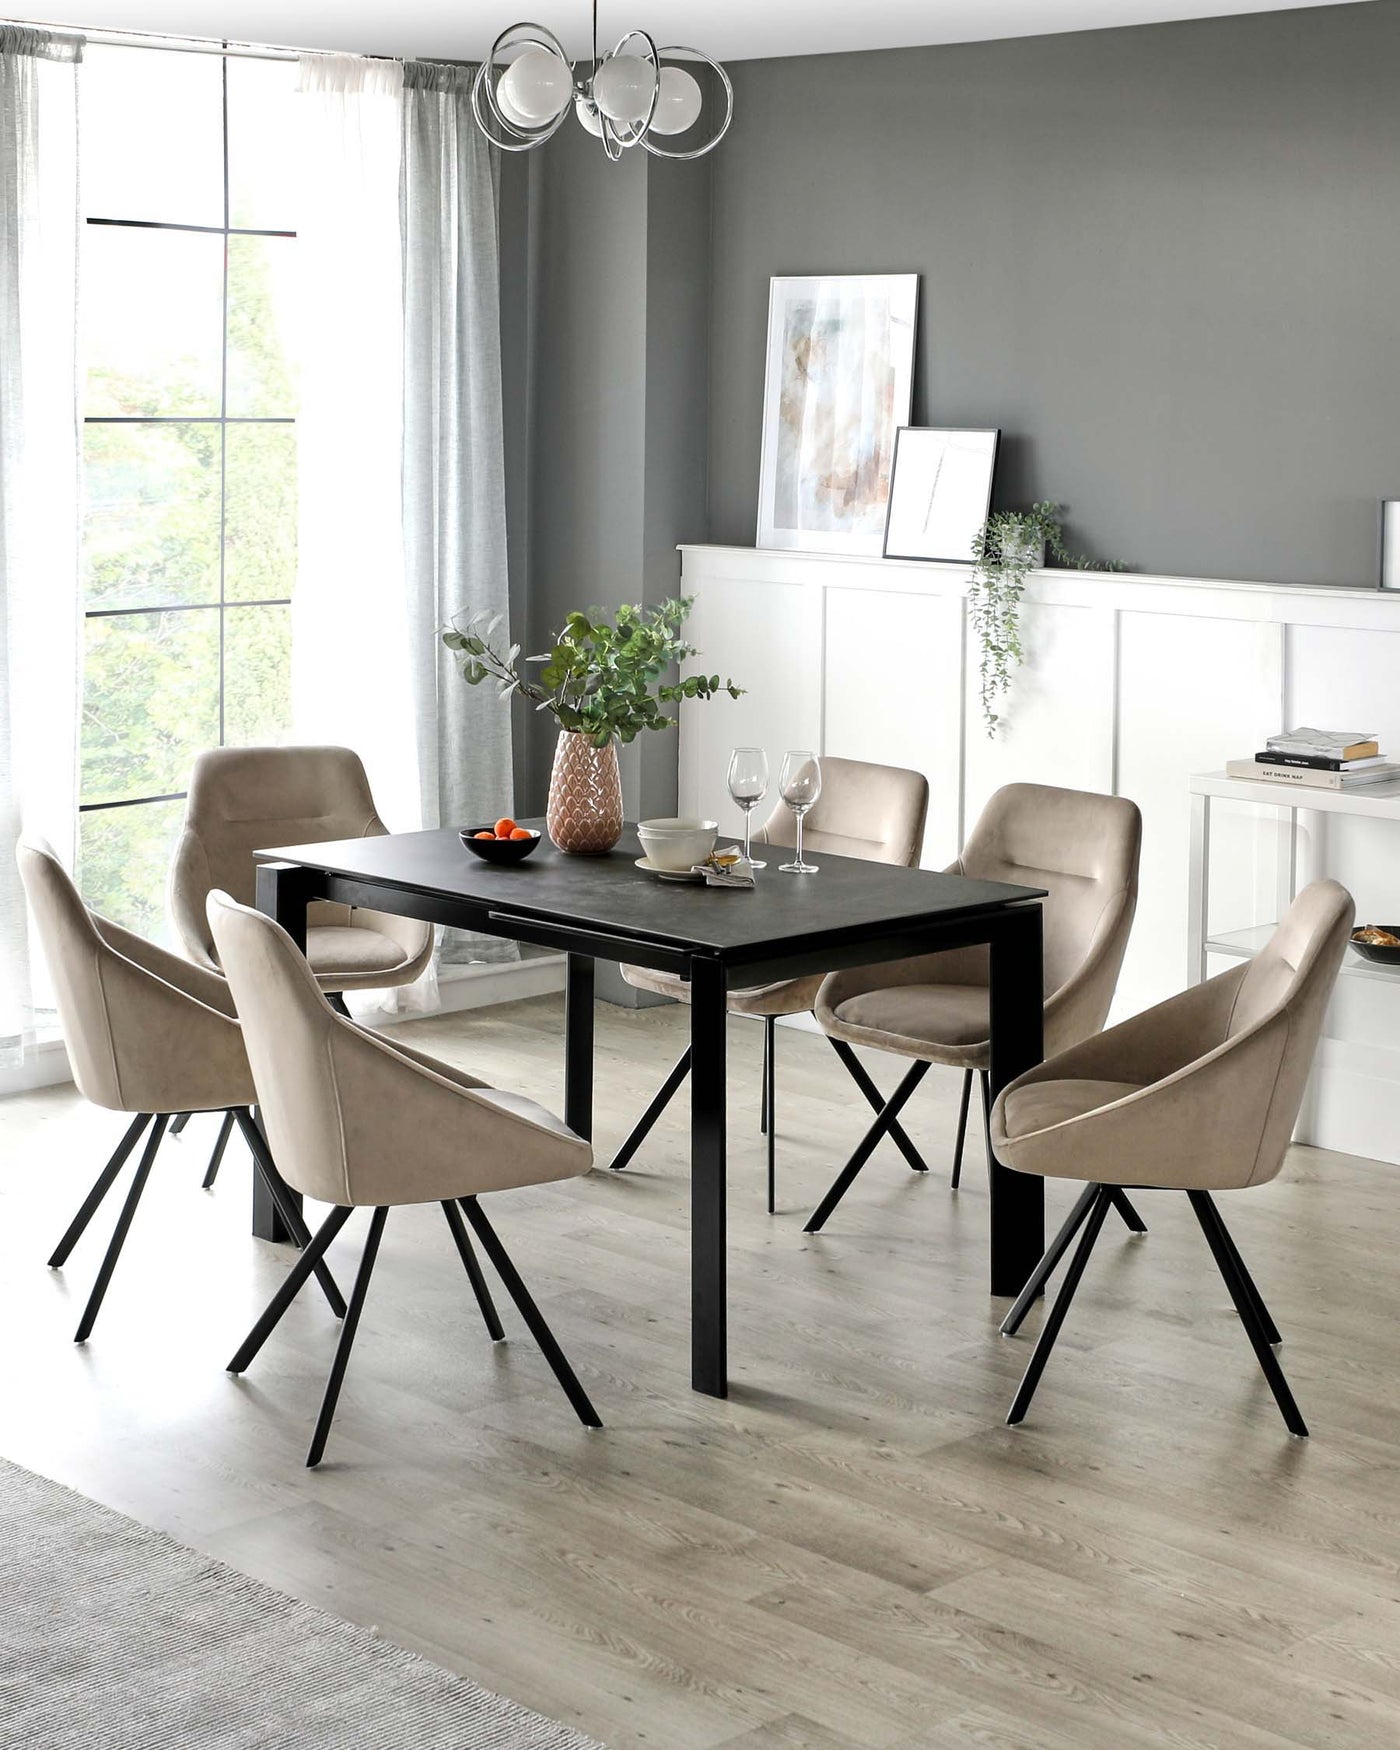 Modern dining room featuring a sleek black rectangul